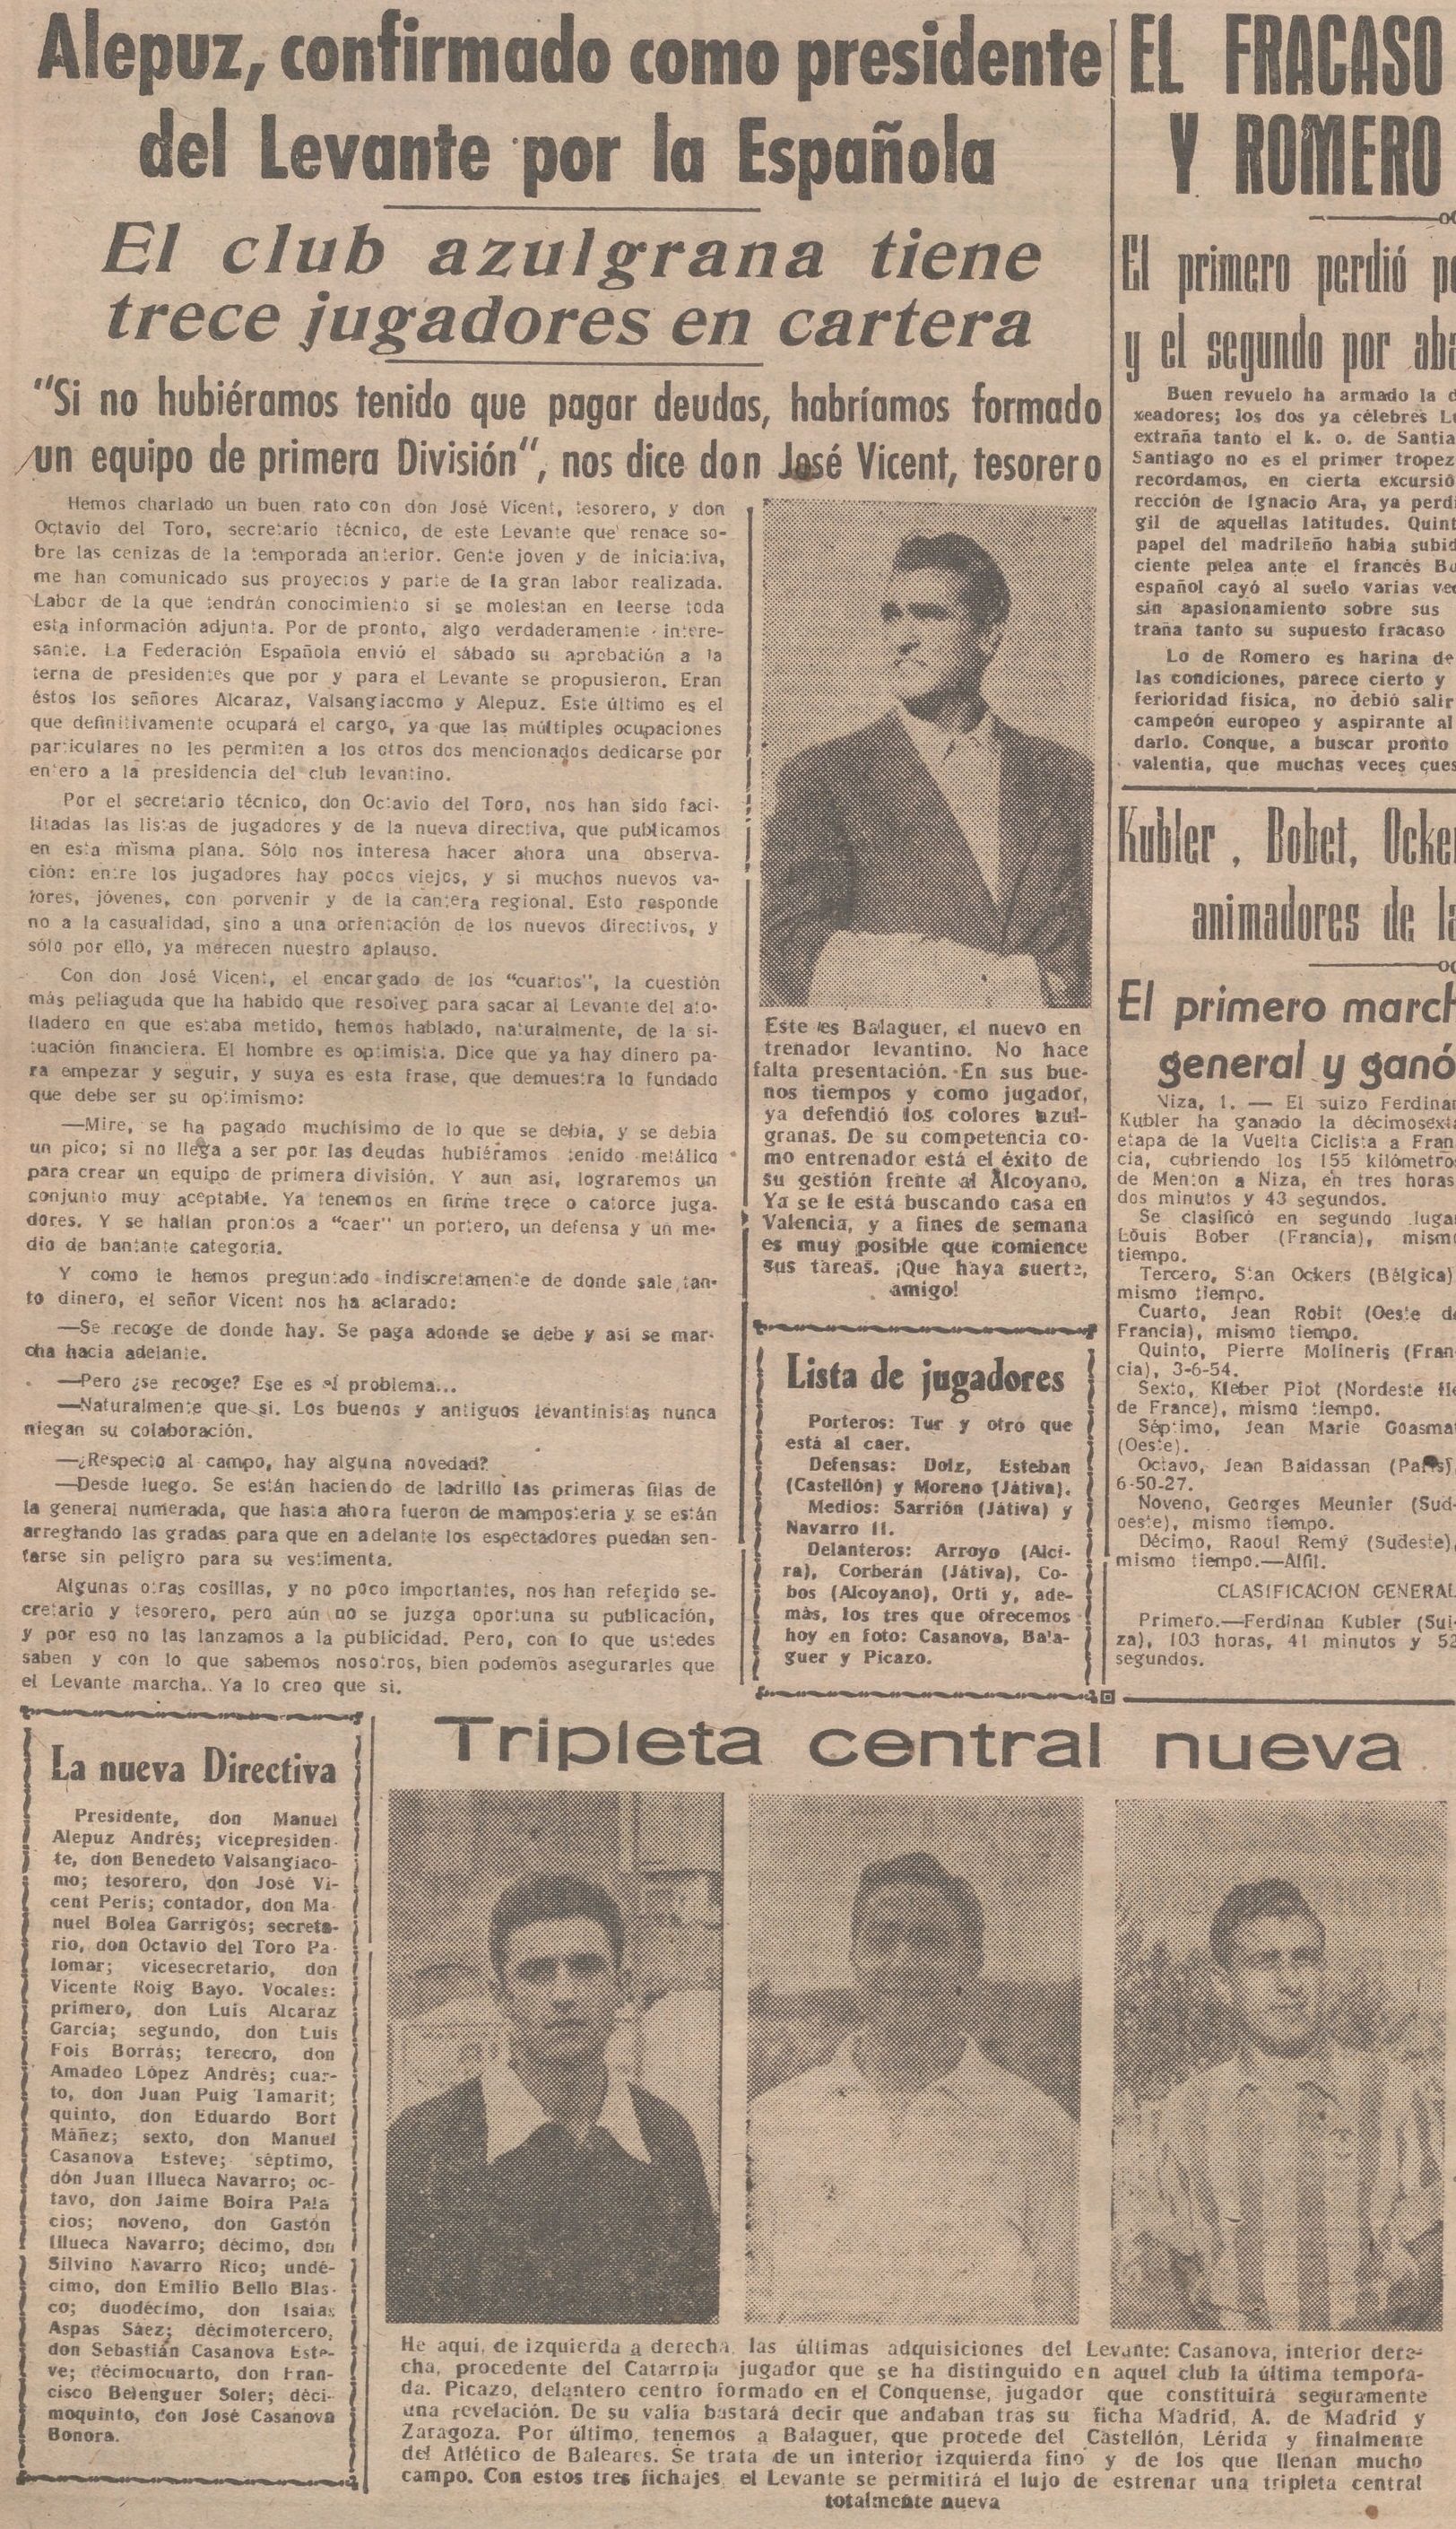 1950.08.01 (1 августа 1950), Алепус подтверждён в роли президента Леванте.jpg